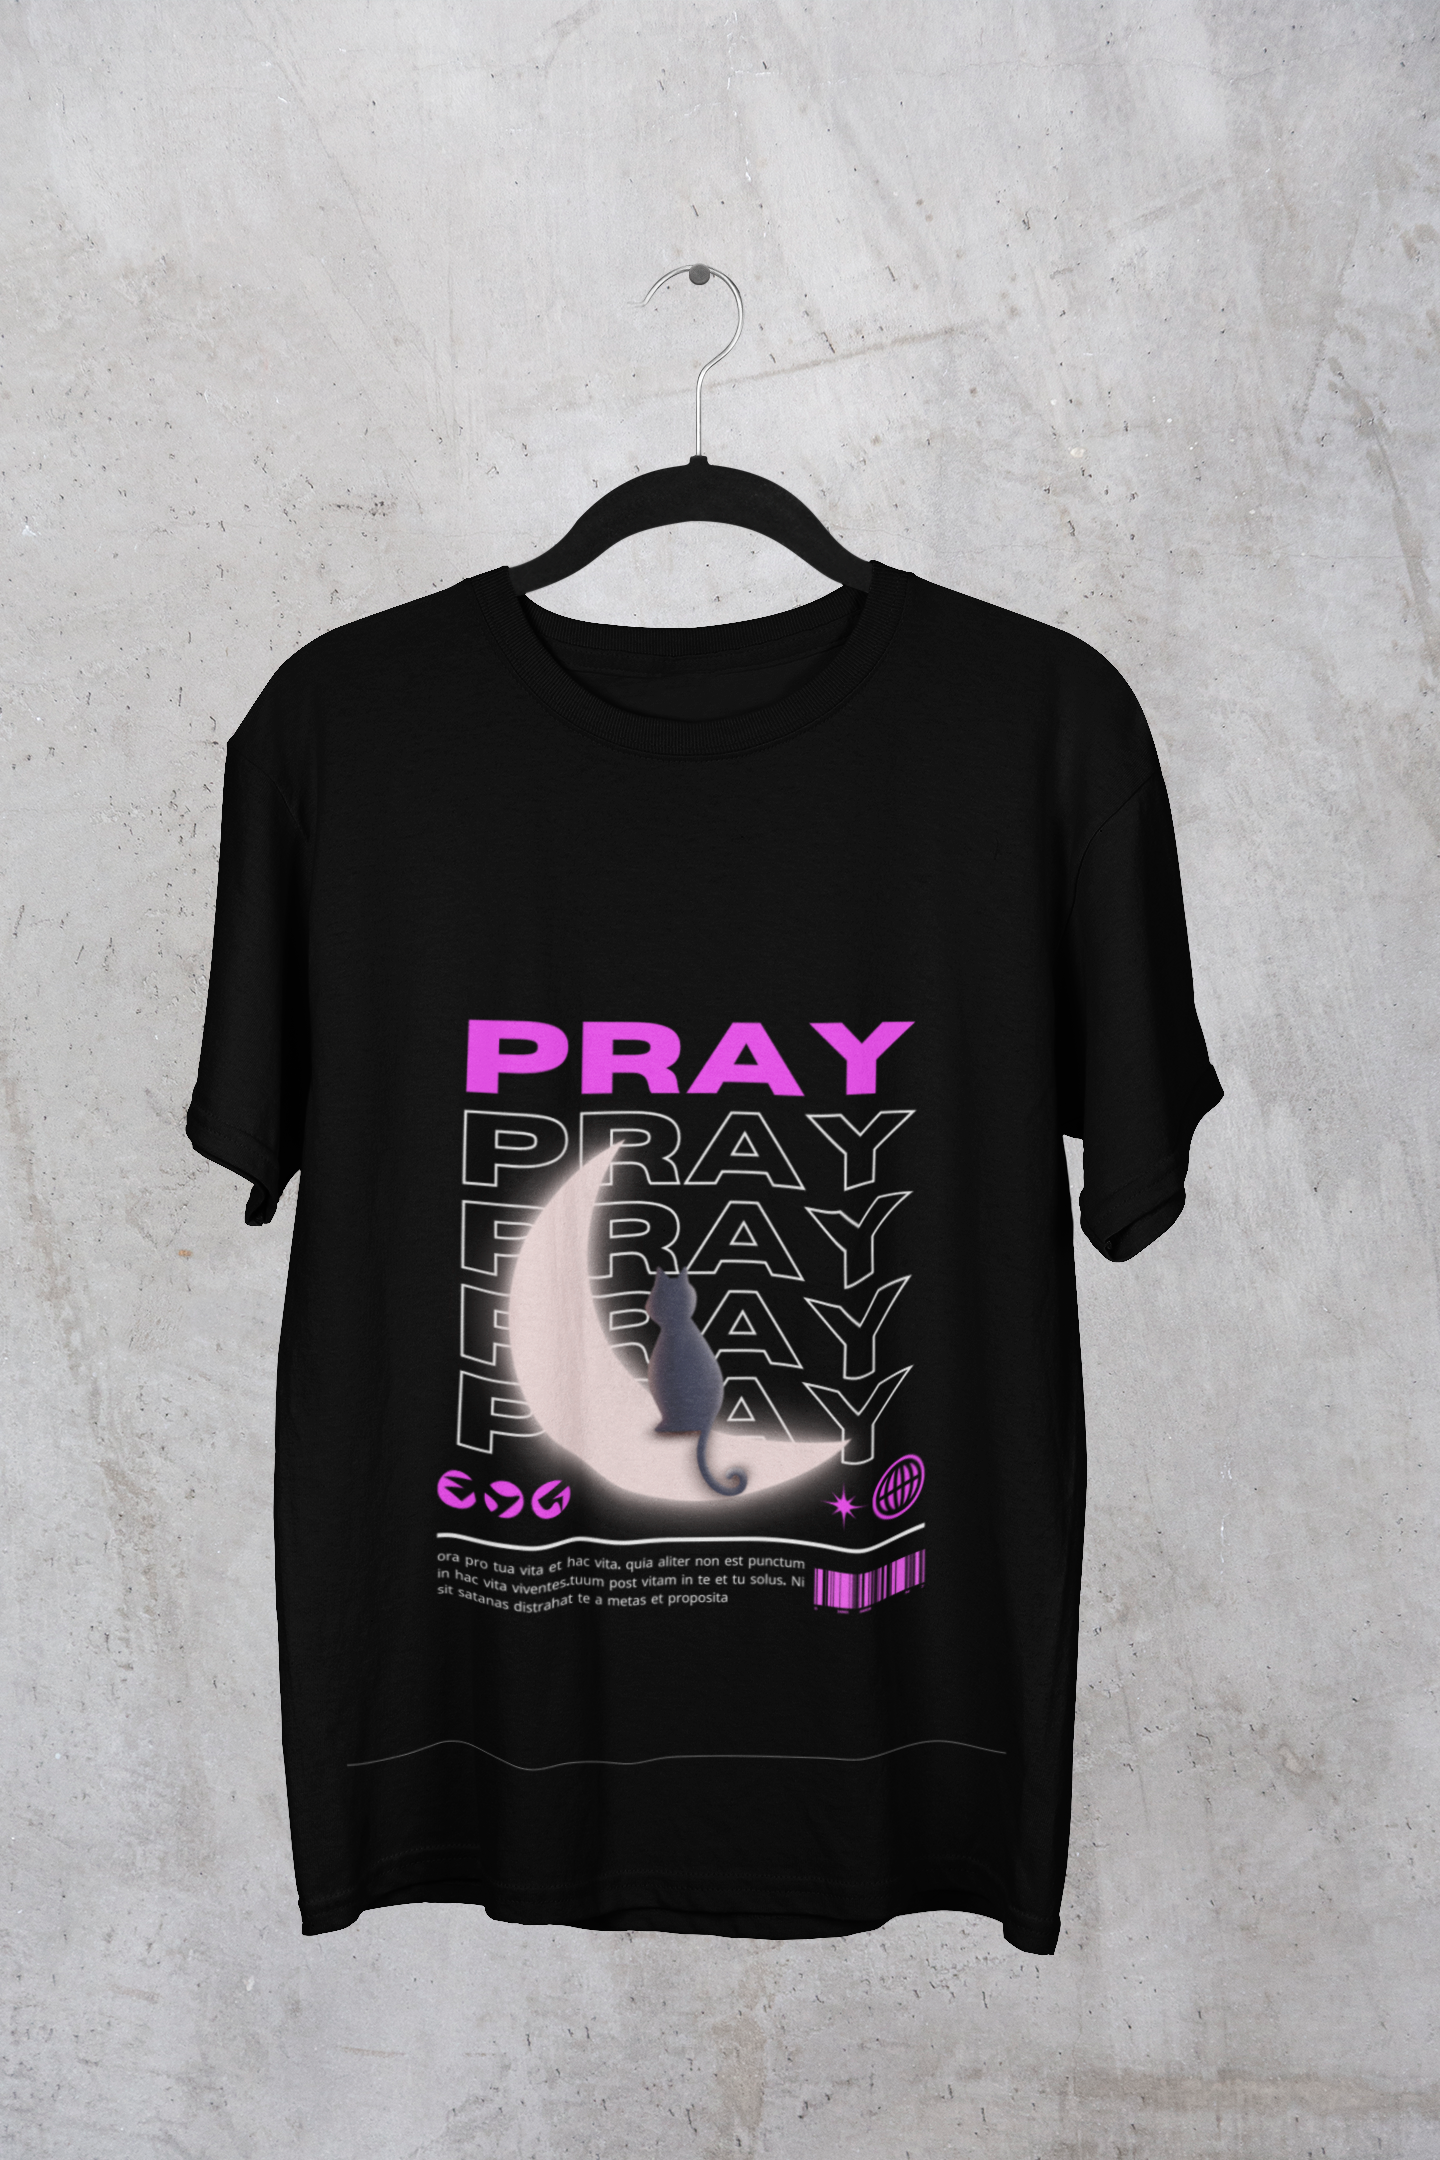 Oversize Pray (glow) t shirt